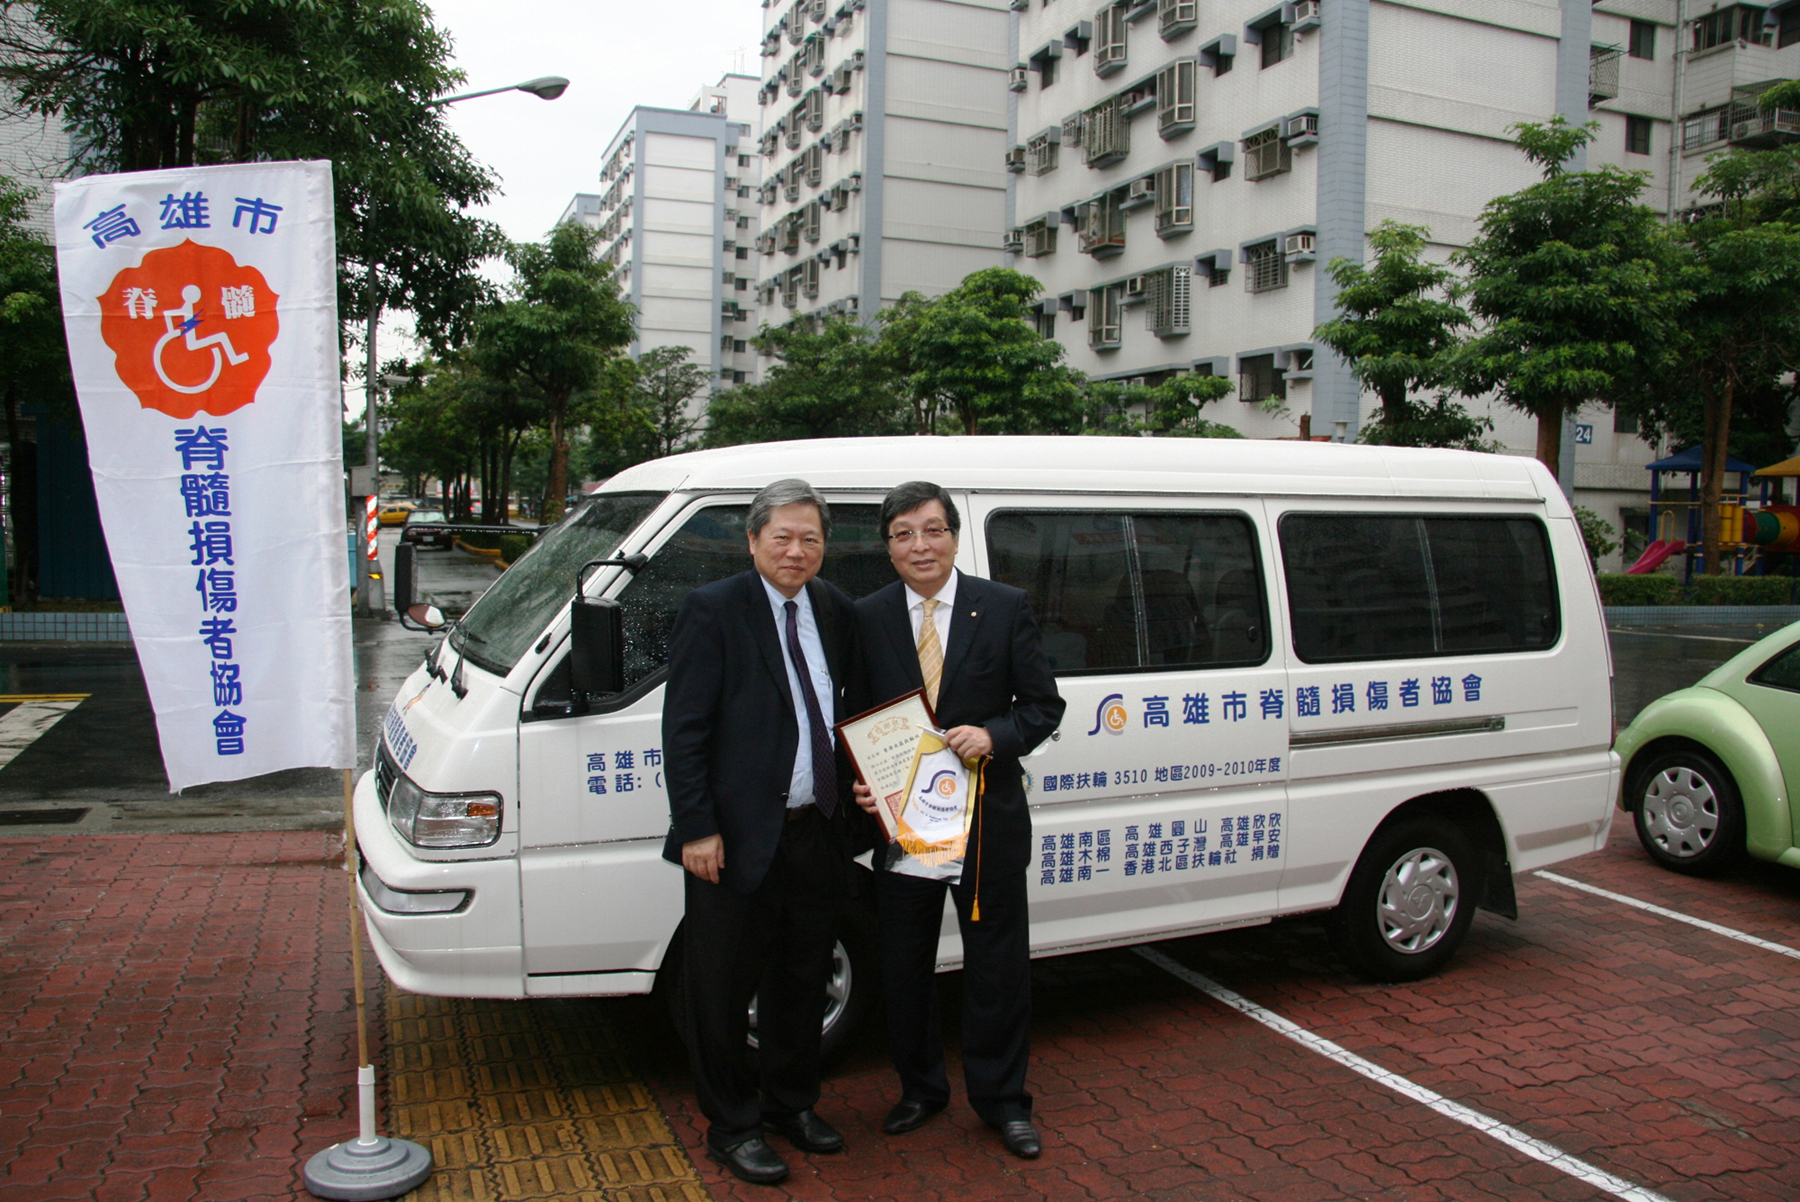 2009 – 2010 Donation of Rehabilitation Ambulance in Kaohsiung